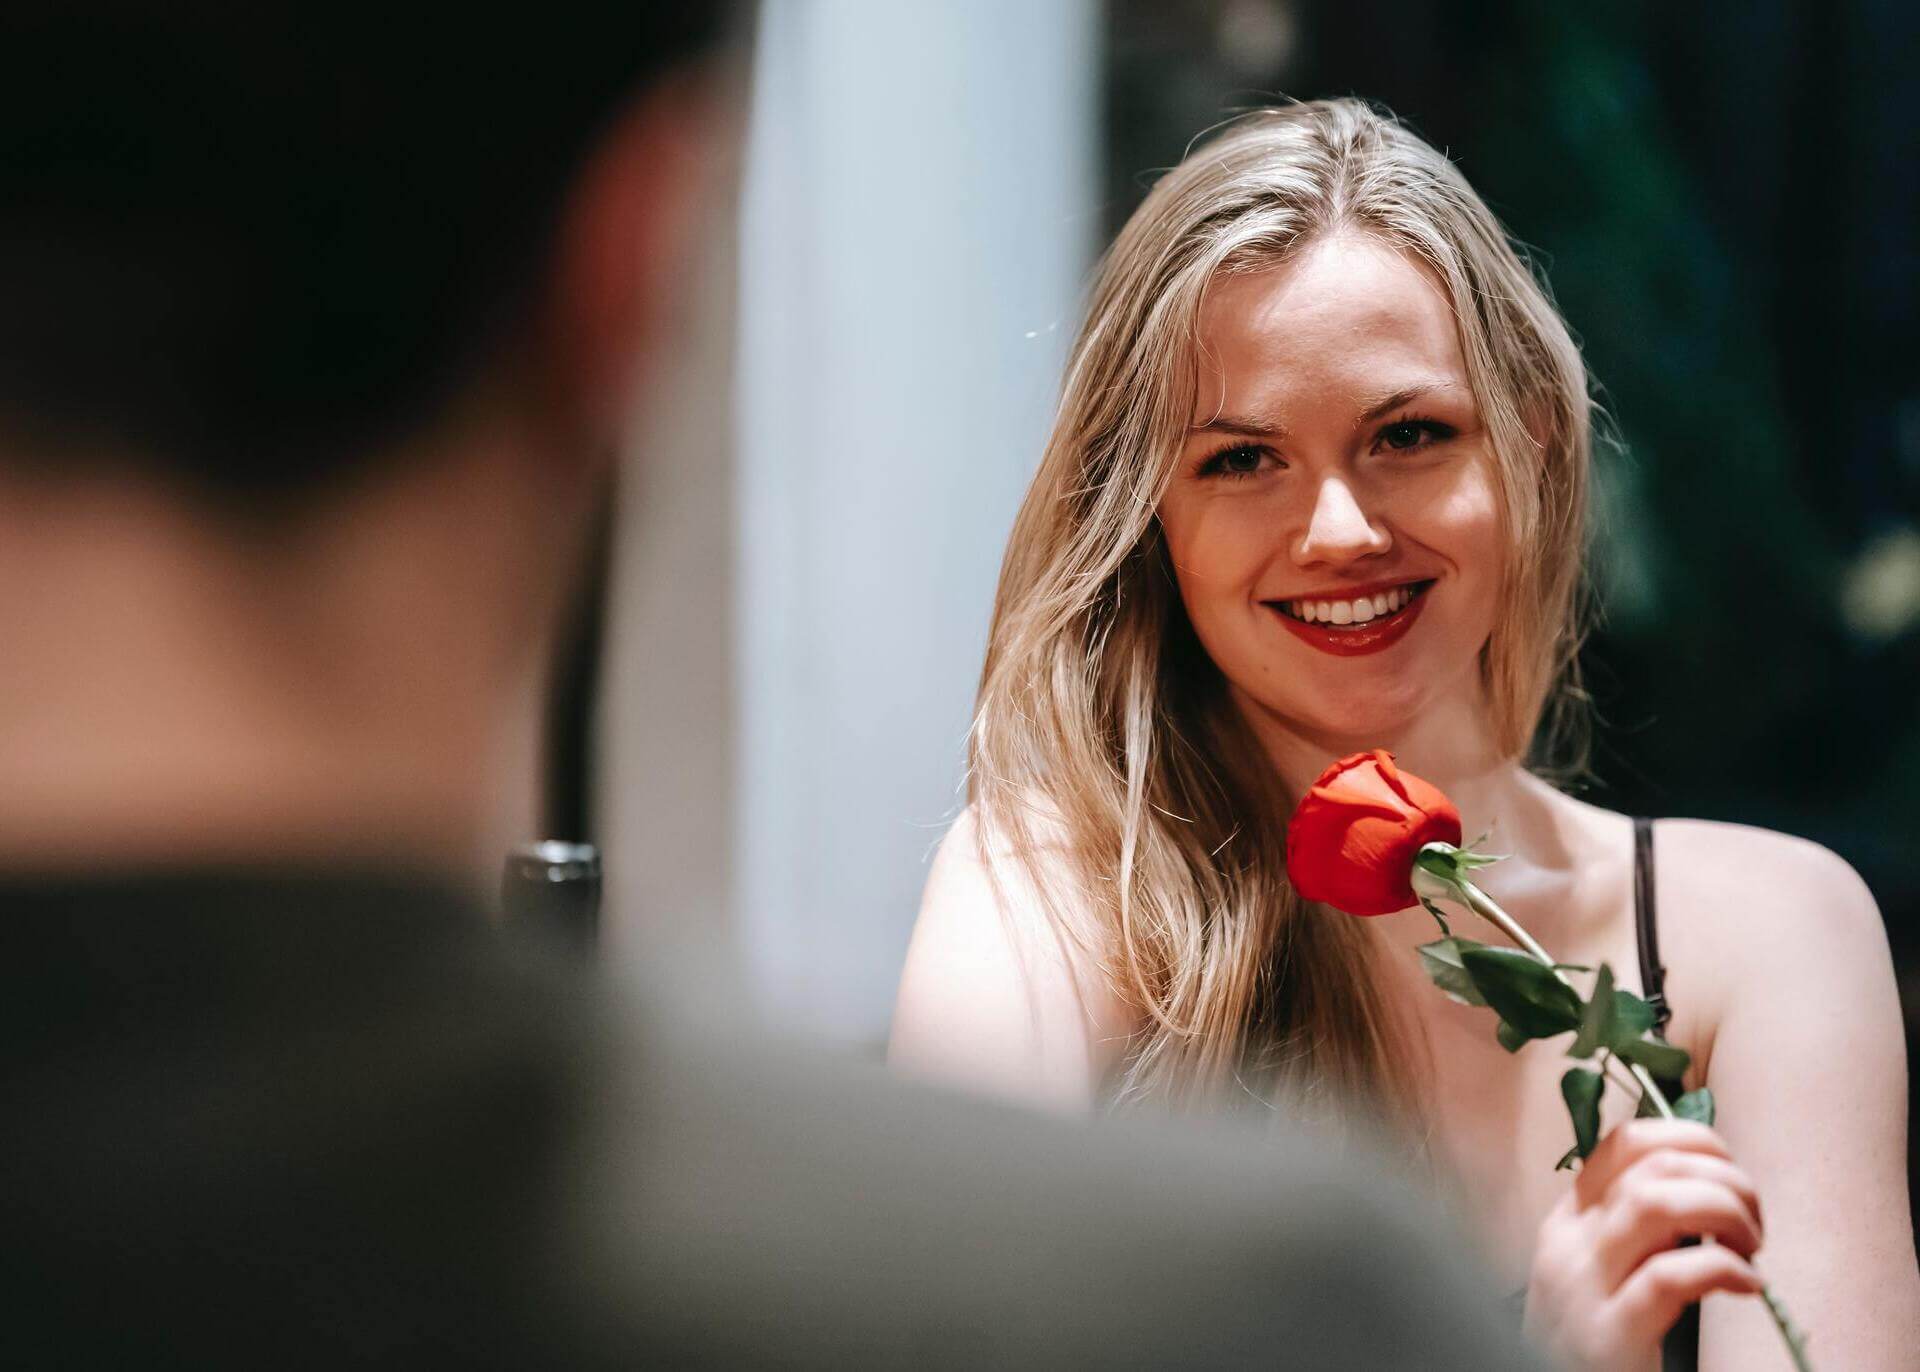 woman receiving flower on a date